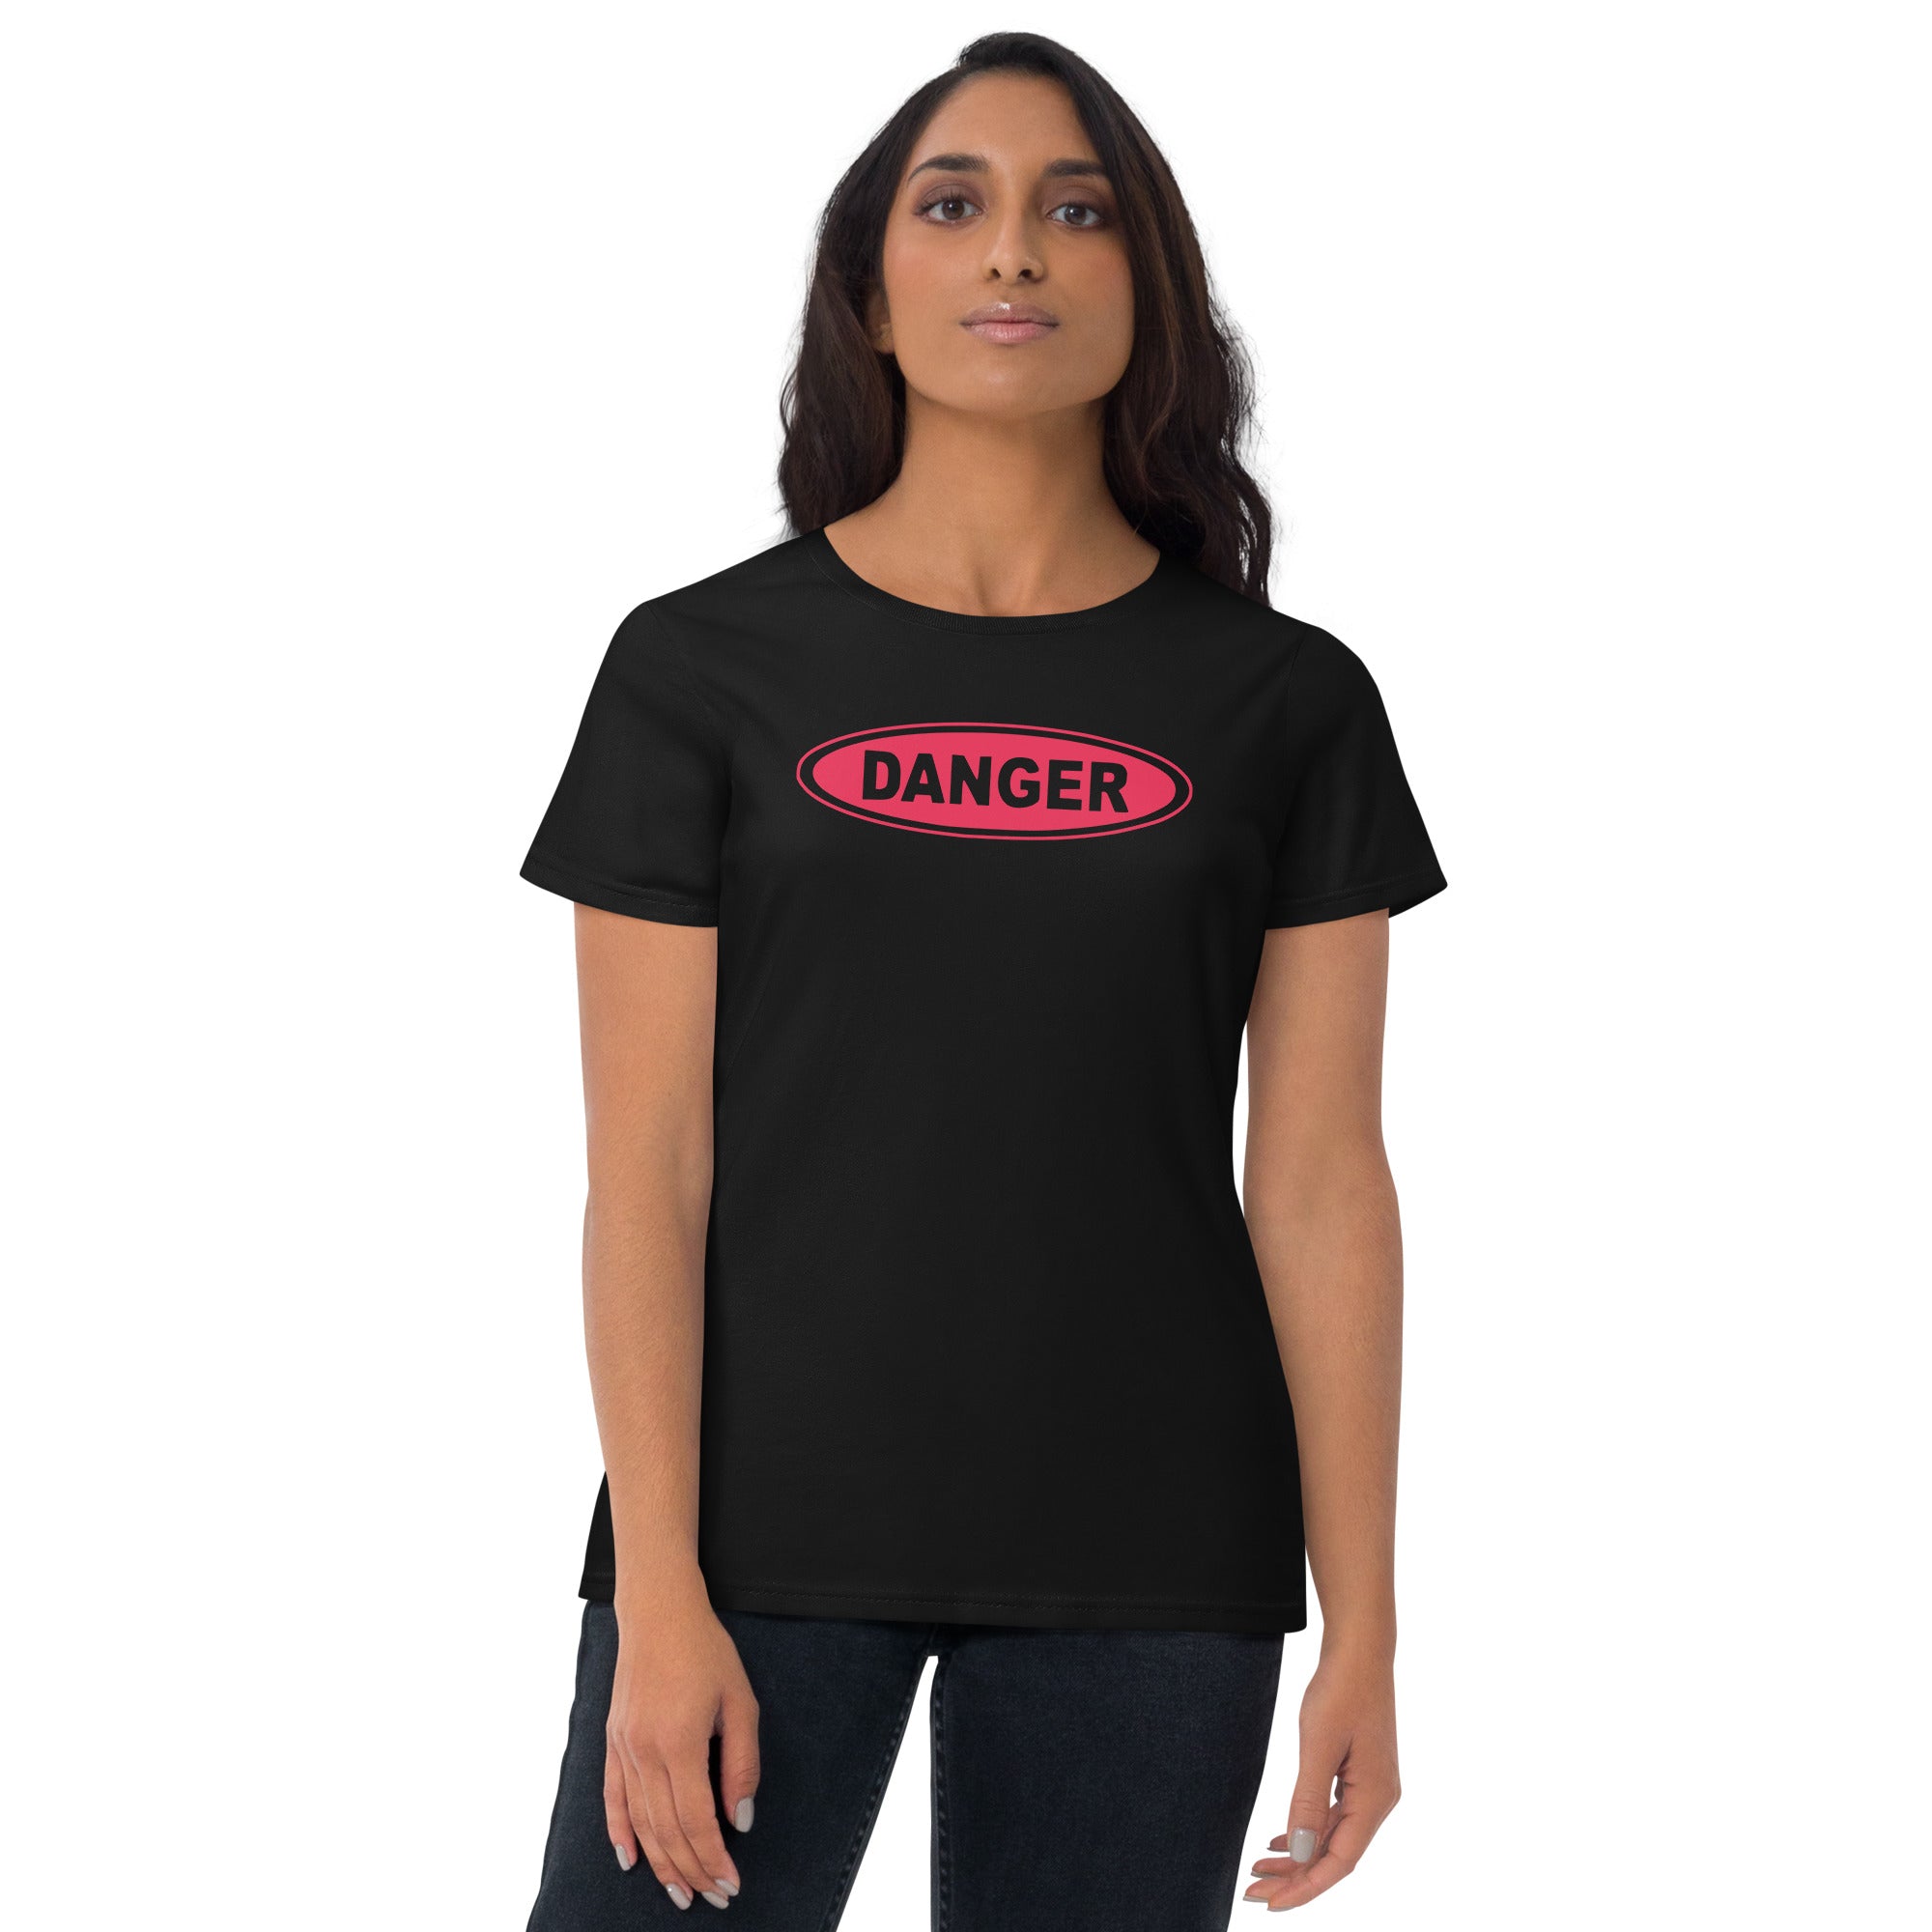 Red Danger Warning Sign Women's Short Sleeve Babydoll T-shirt